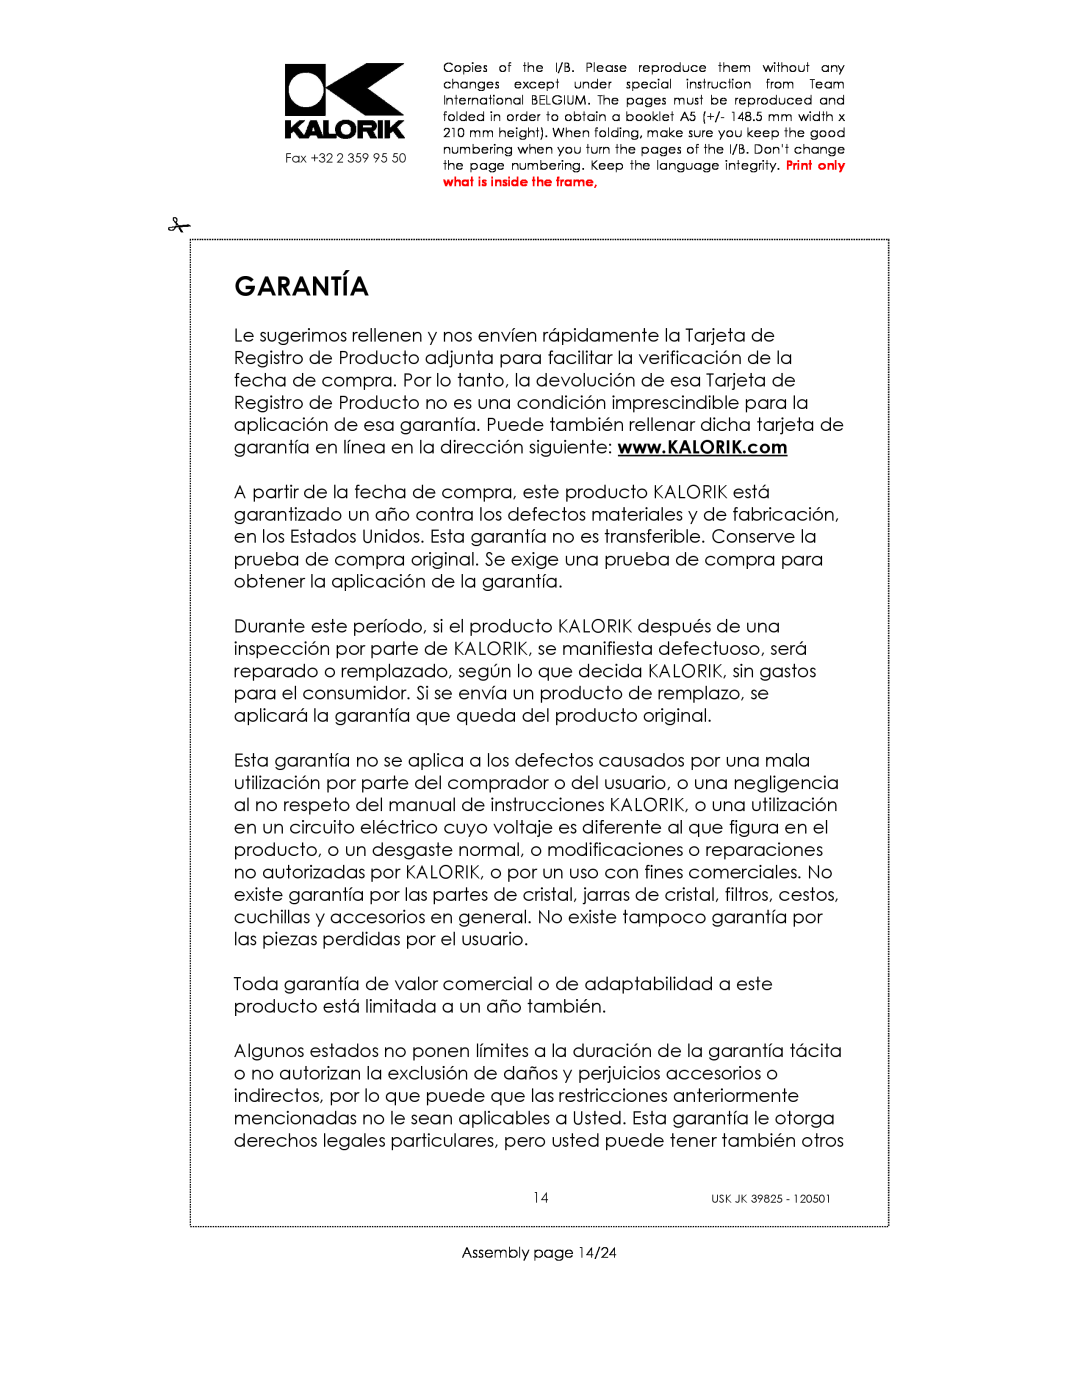 Kalorik JK 39825 manual Garantía, Assembly page 14/24 